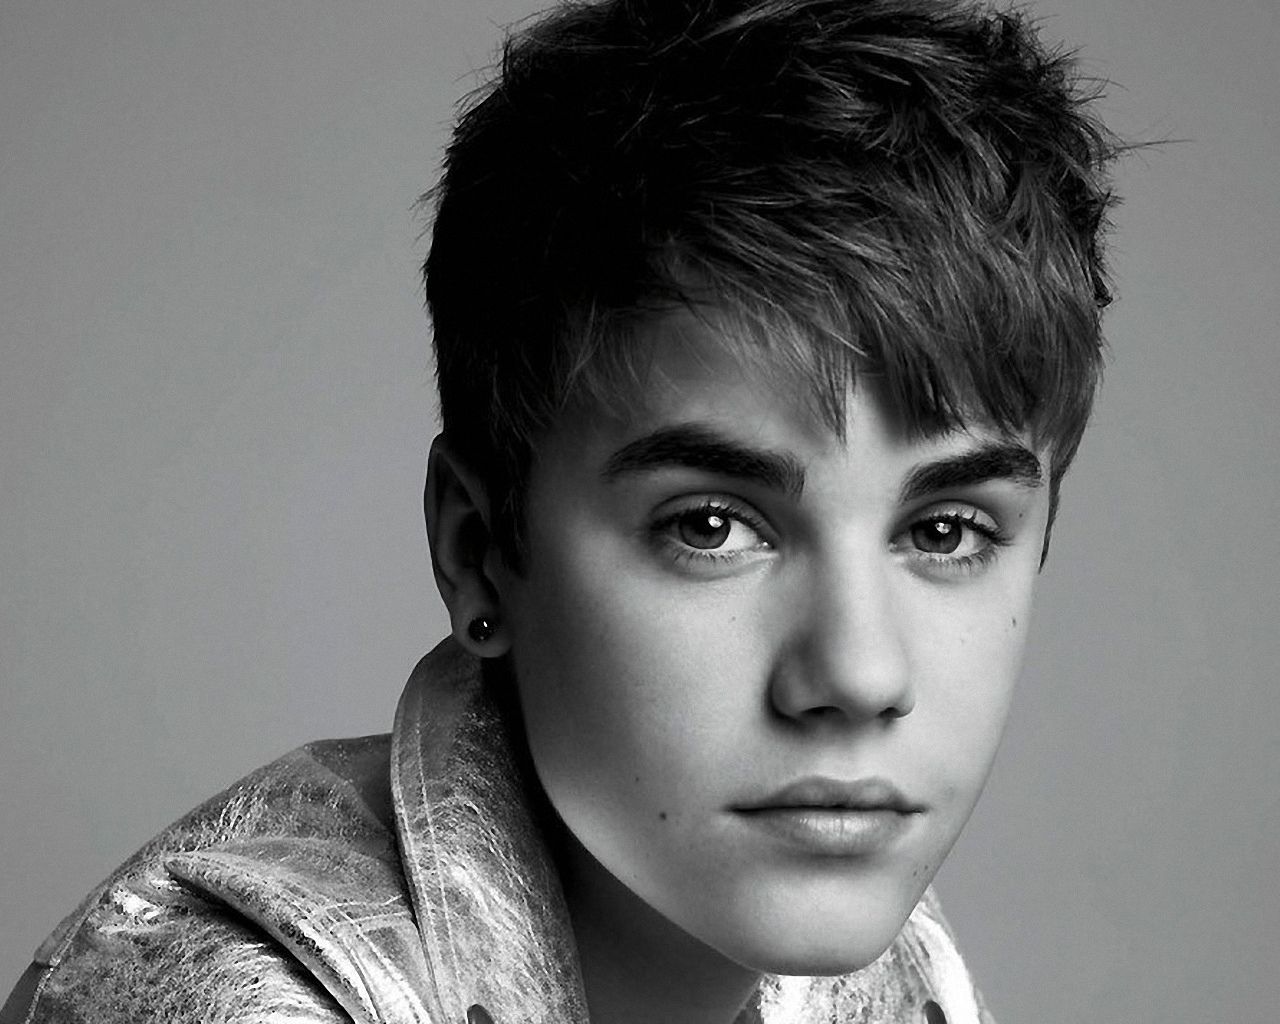 Justin Bieber 2012 1280x1024 Wallpapers, 1280x1024 Wallpapers ...